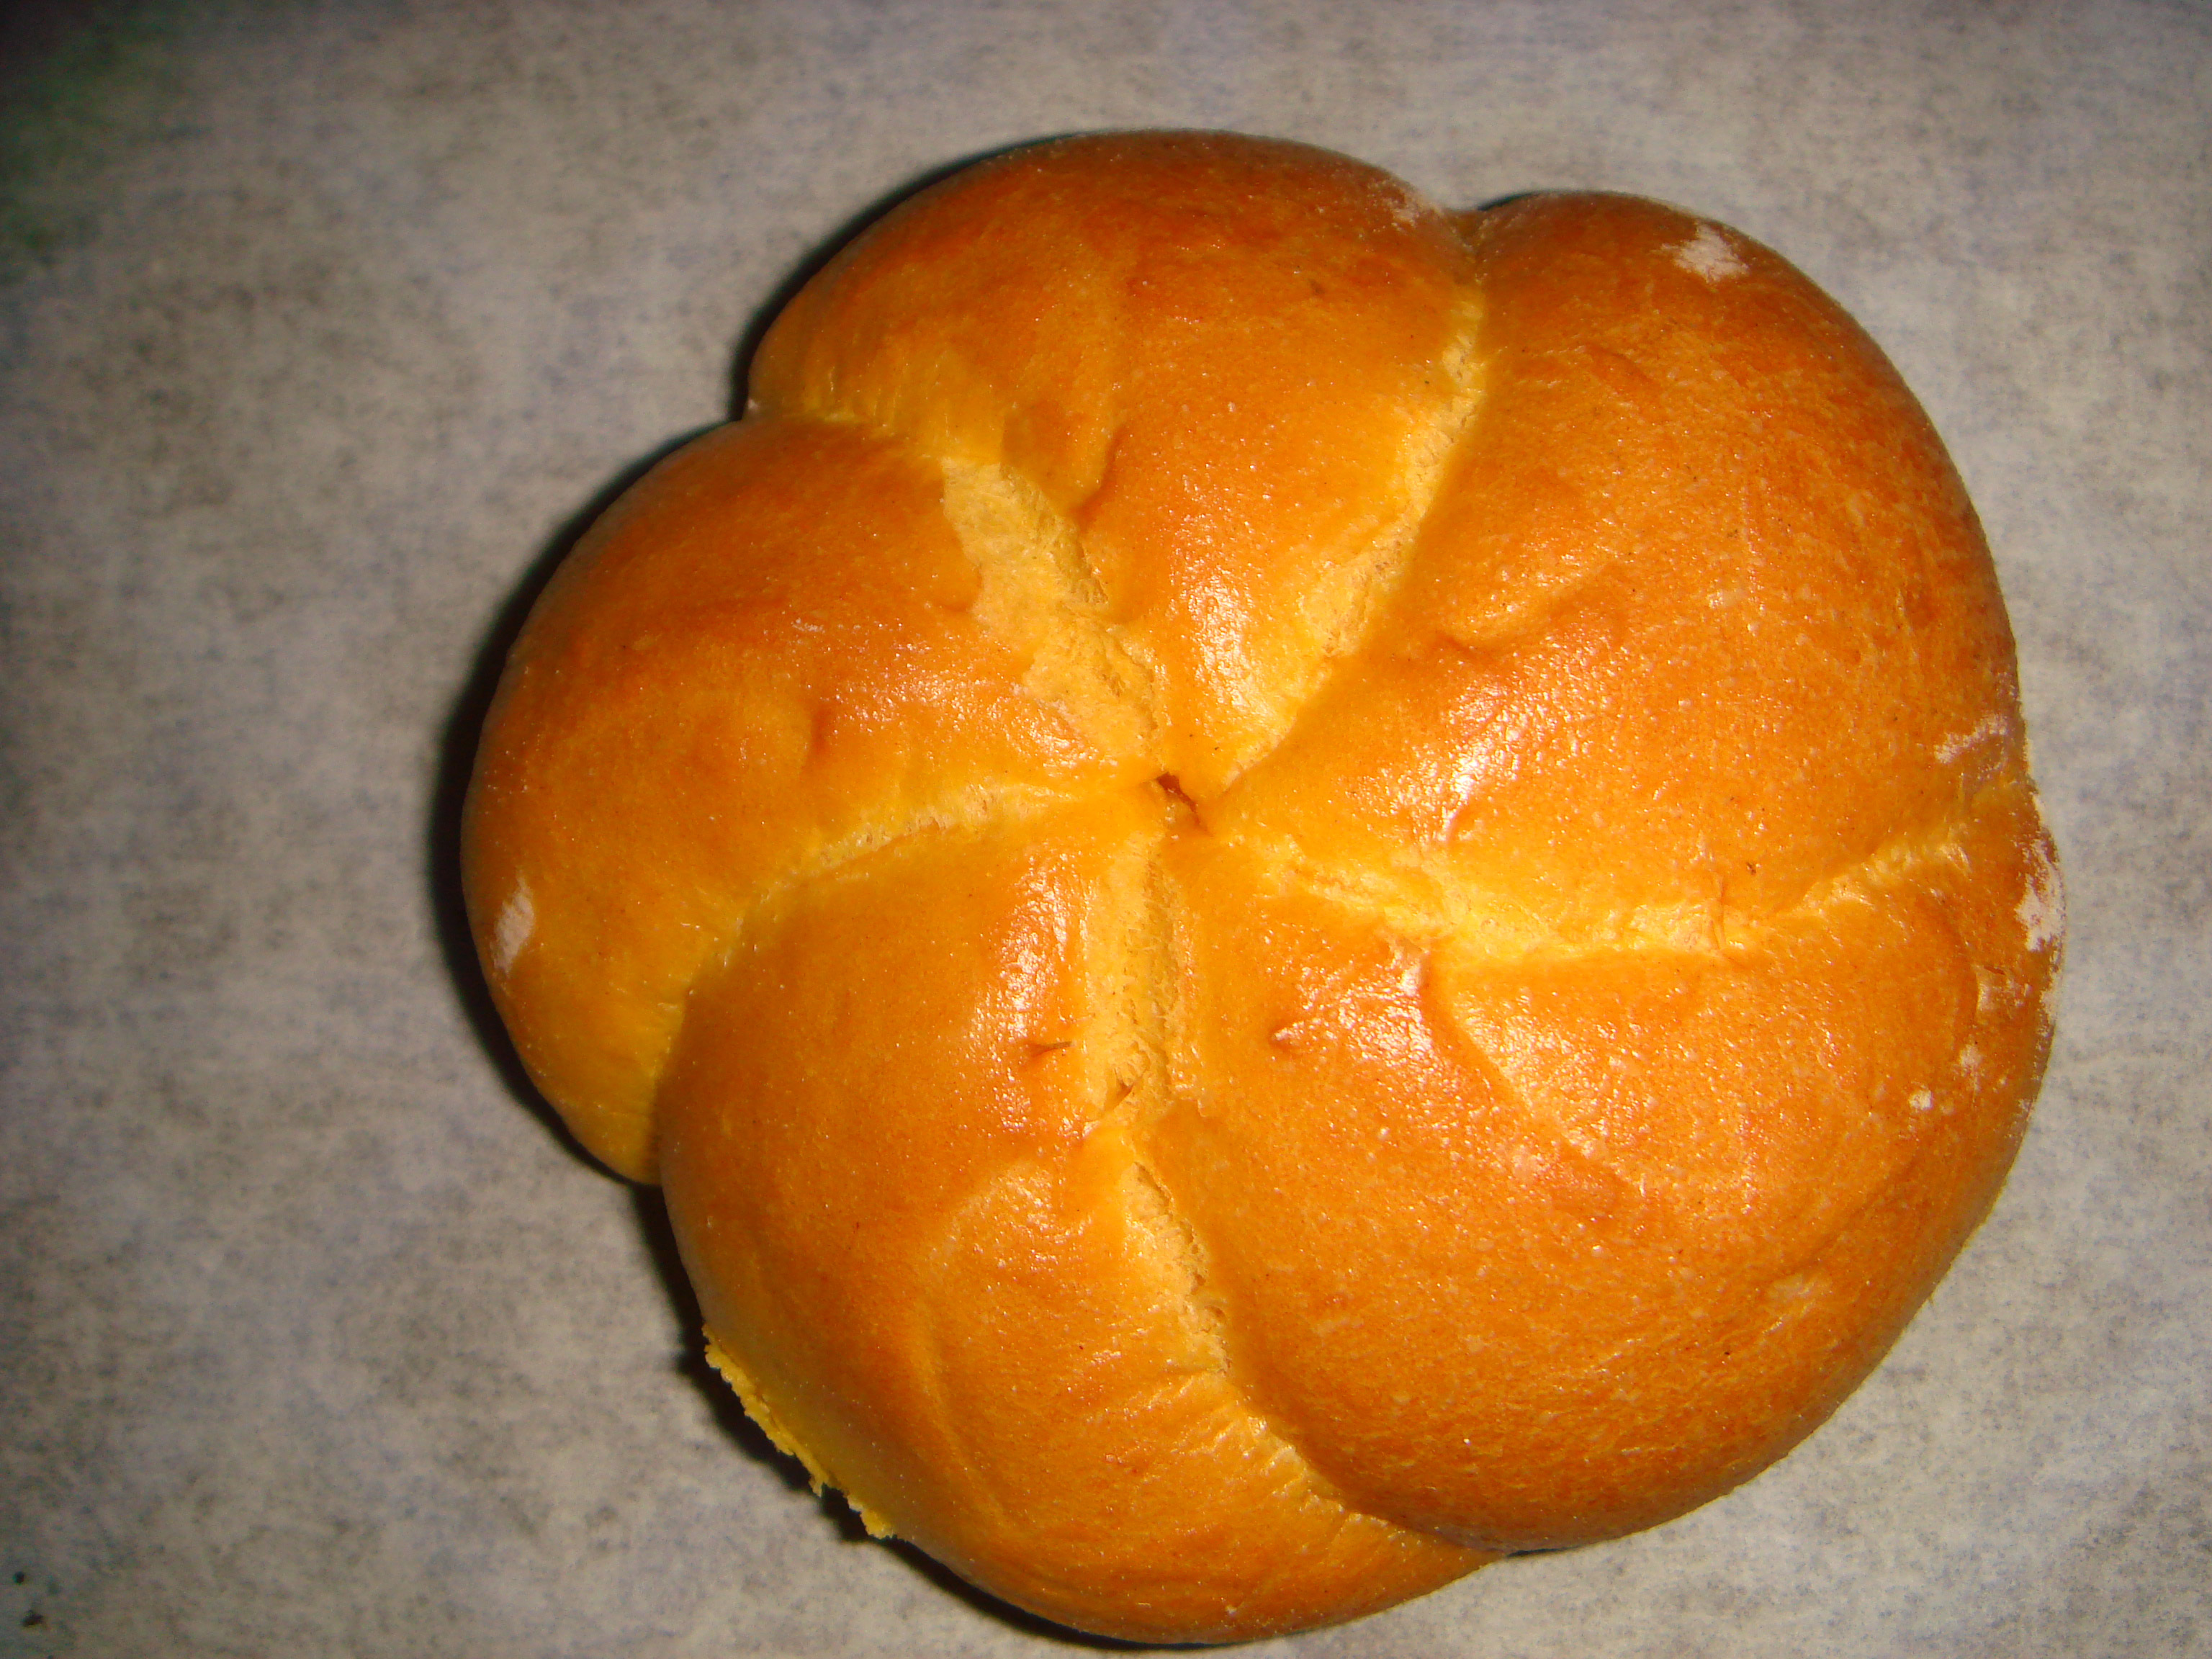 CSB Bread